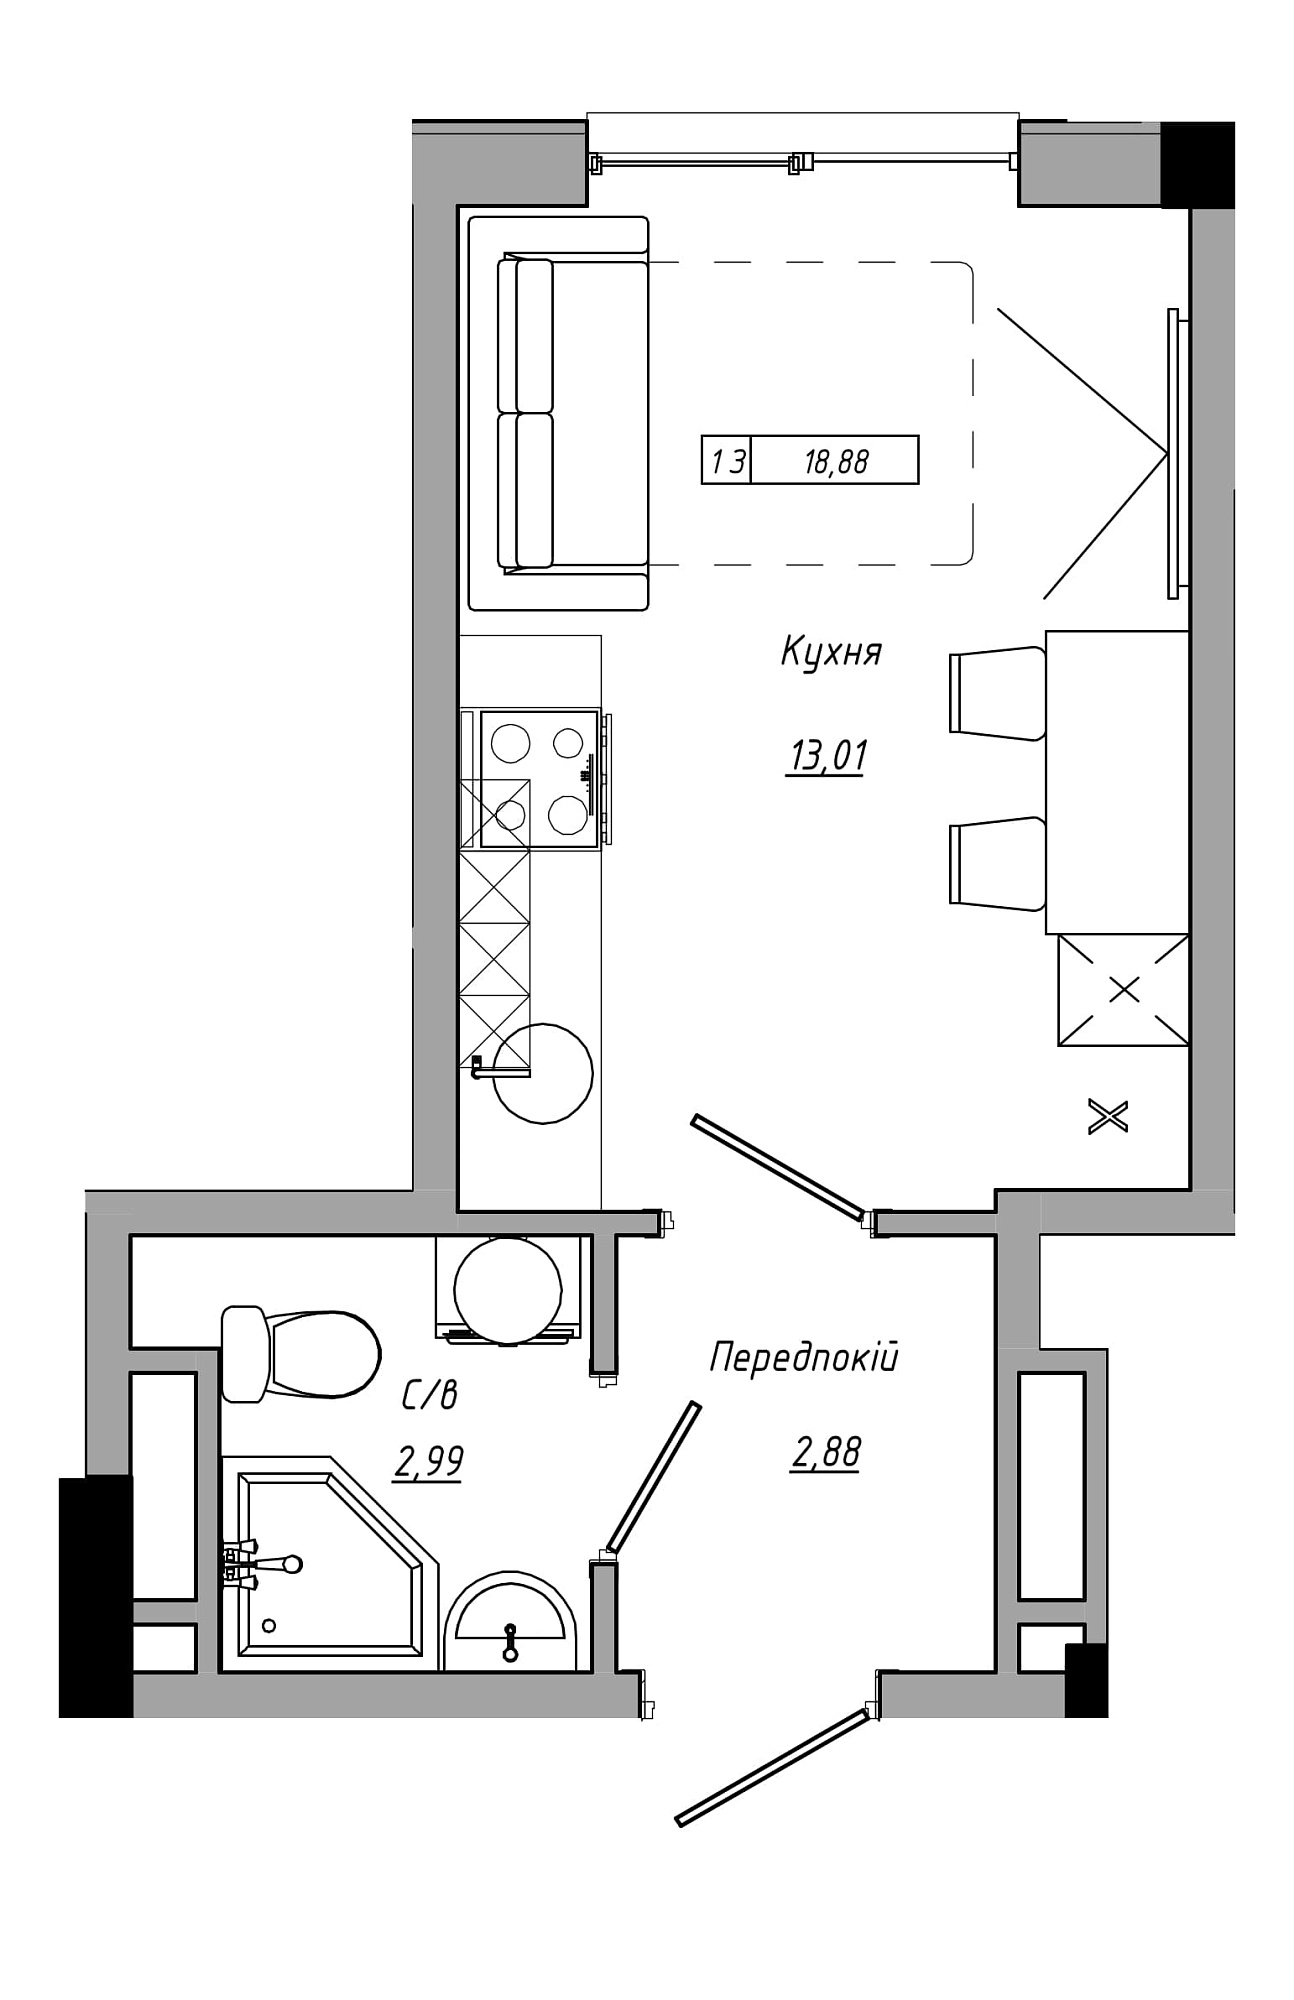 Planning Smart flats area 18.88m2, AB-21-05/00011.